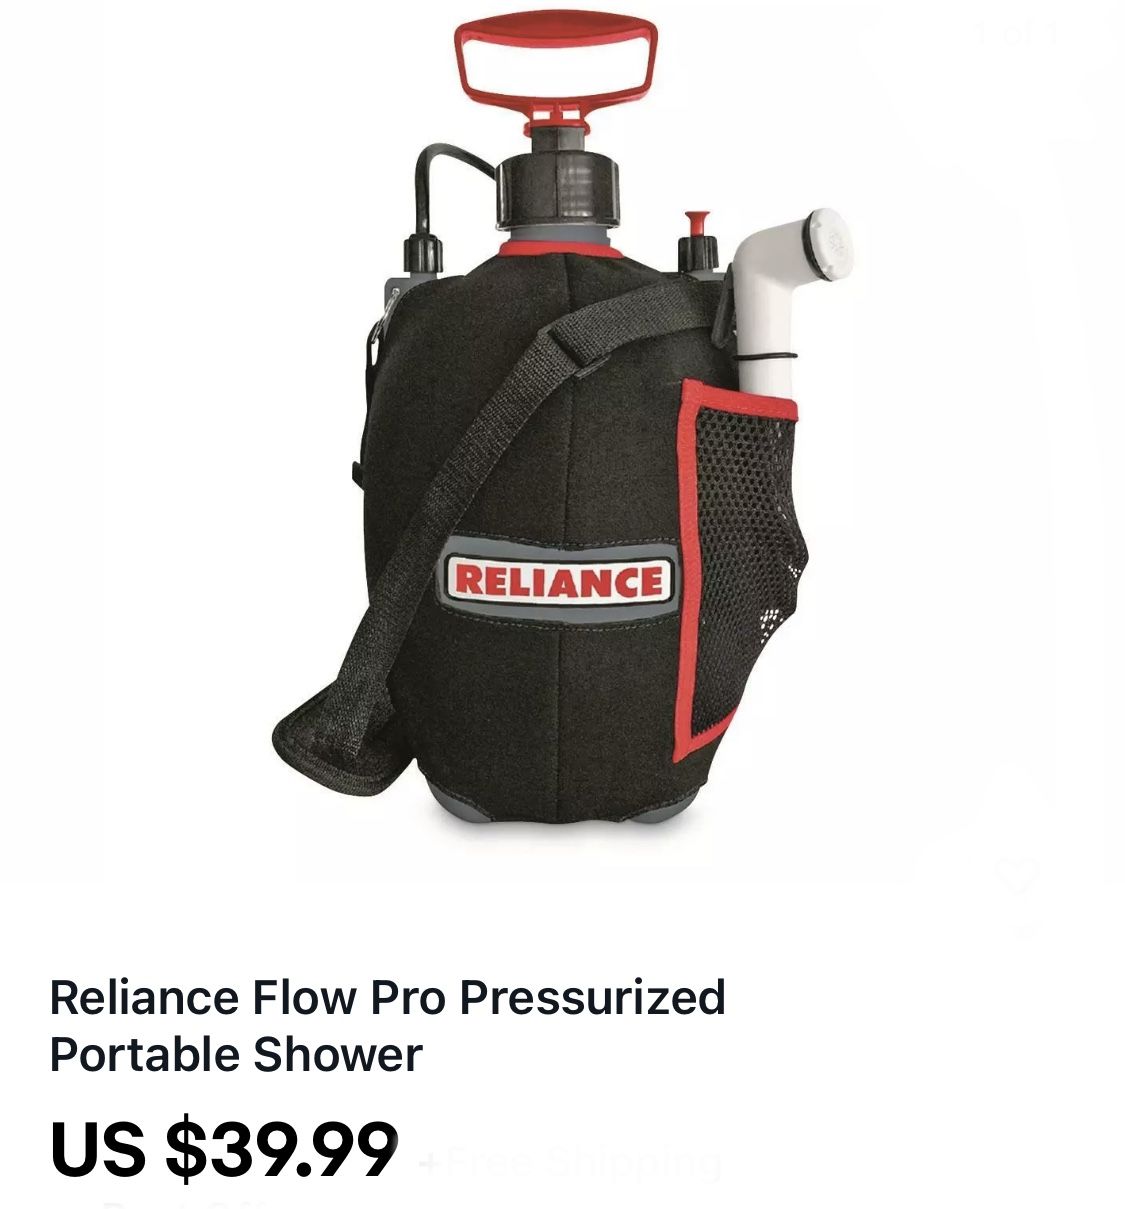 Reliance Flow Pro Pressurized Portable Shower